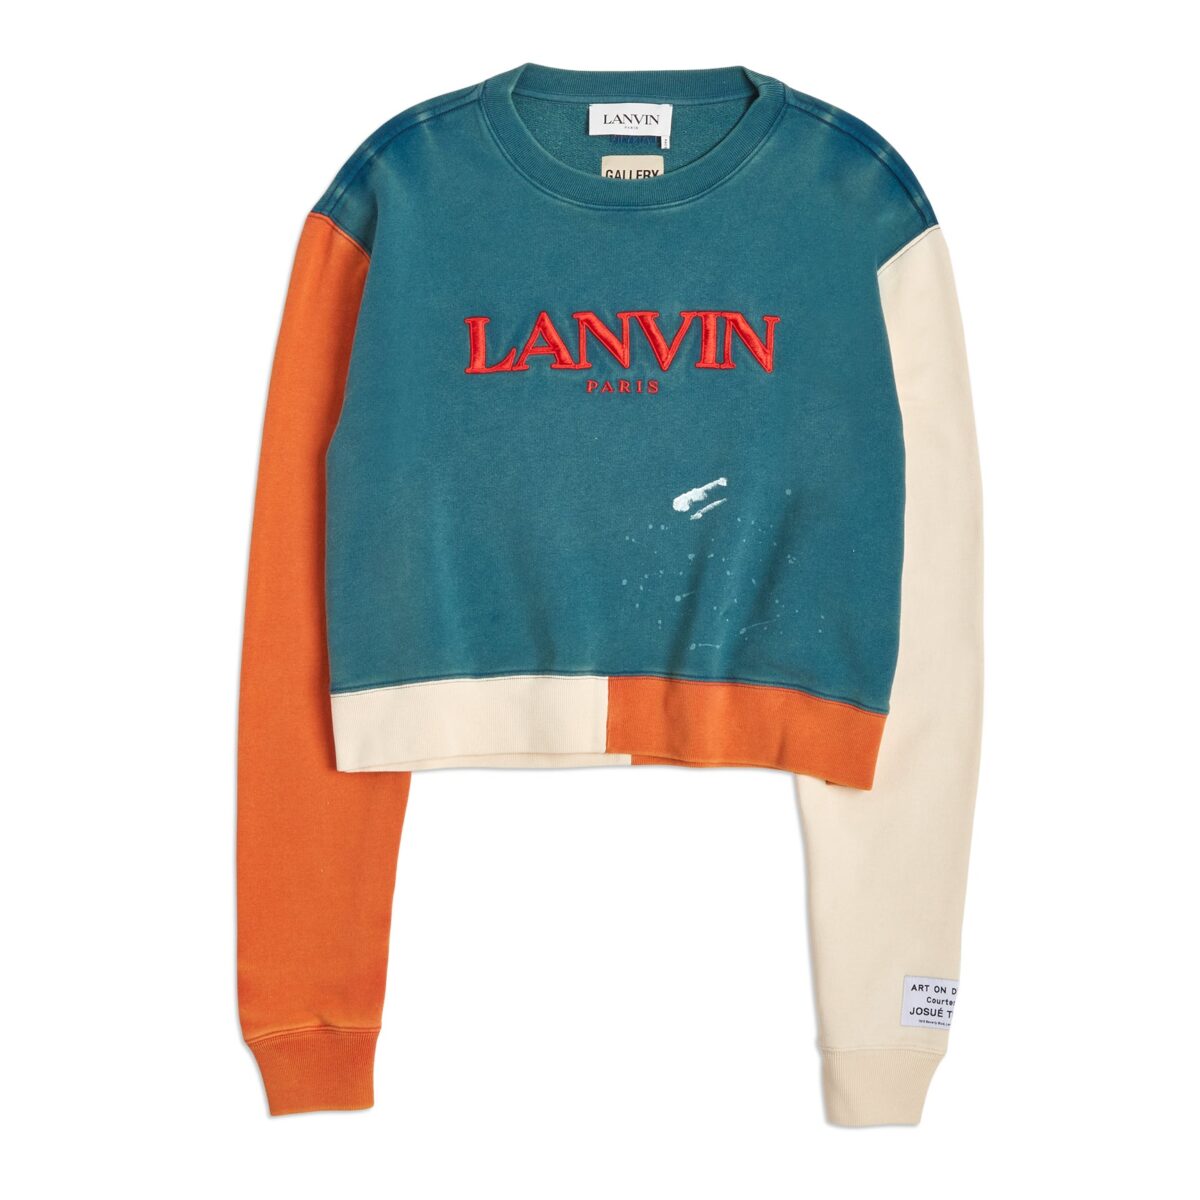 Gallery Dept X Lanvin Cropped Sweatshirt